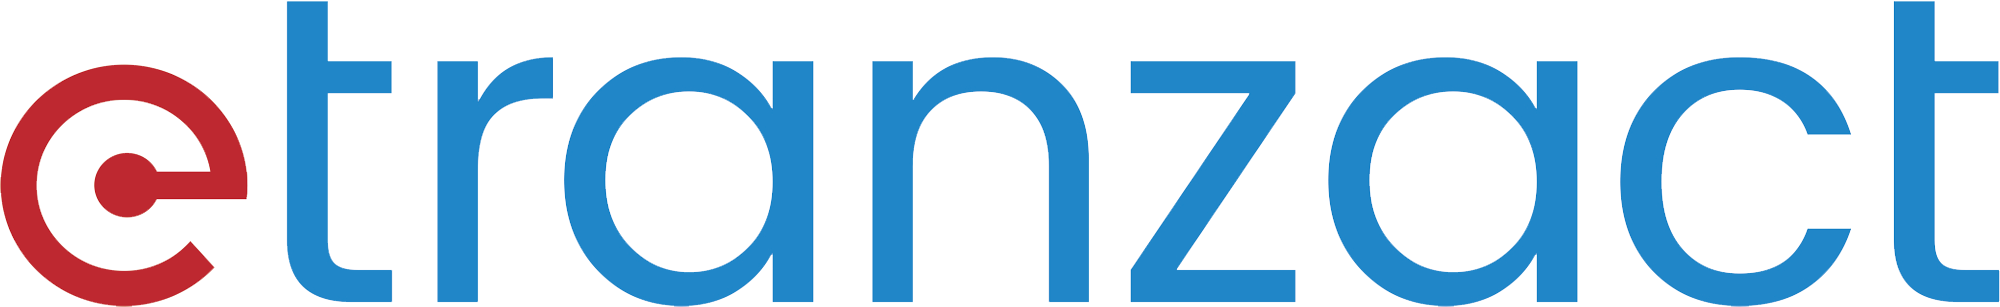 cropped eTranzact Logo 1